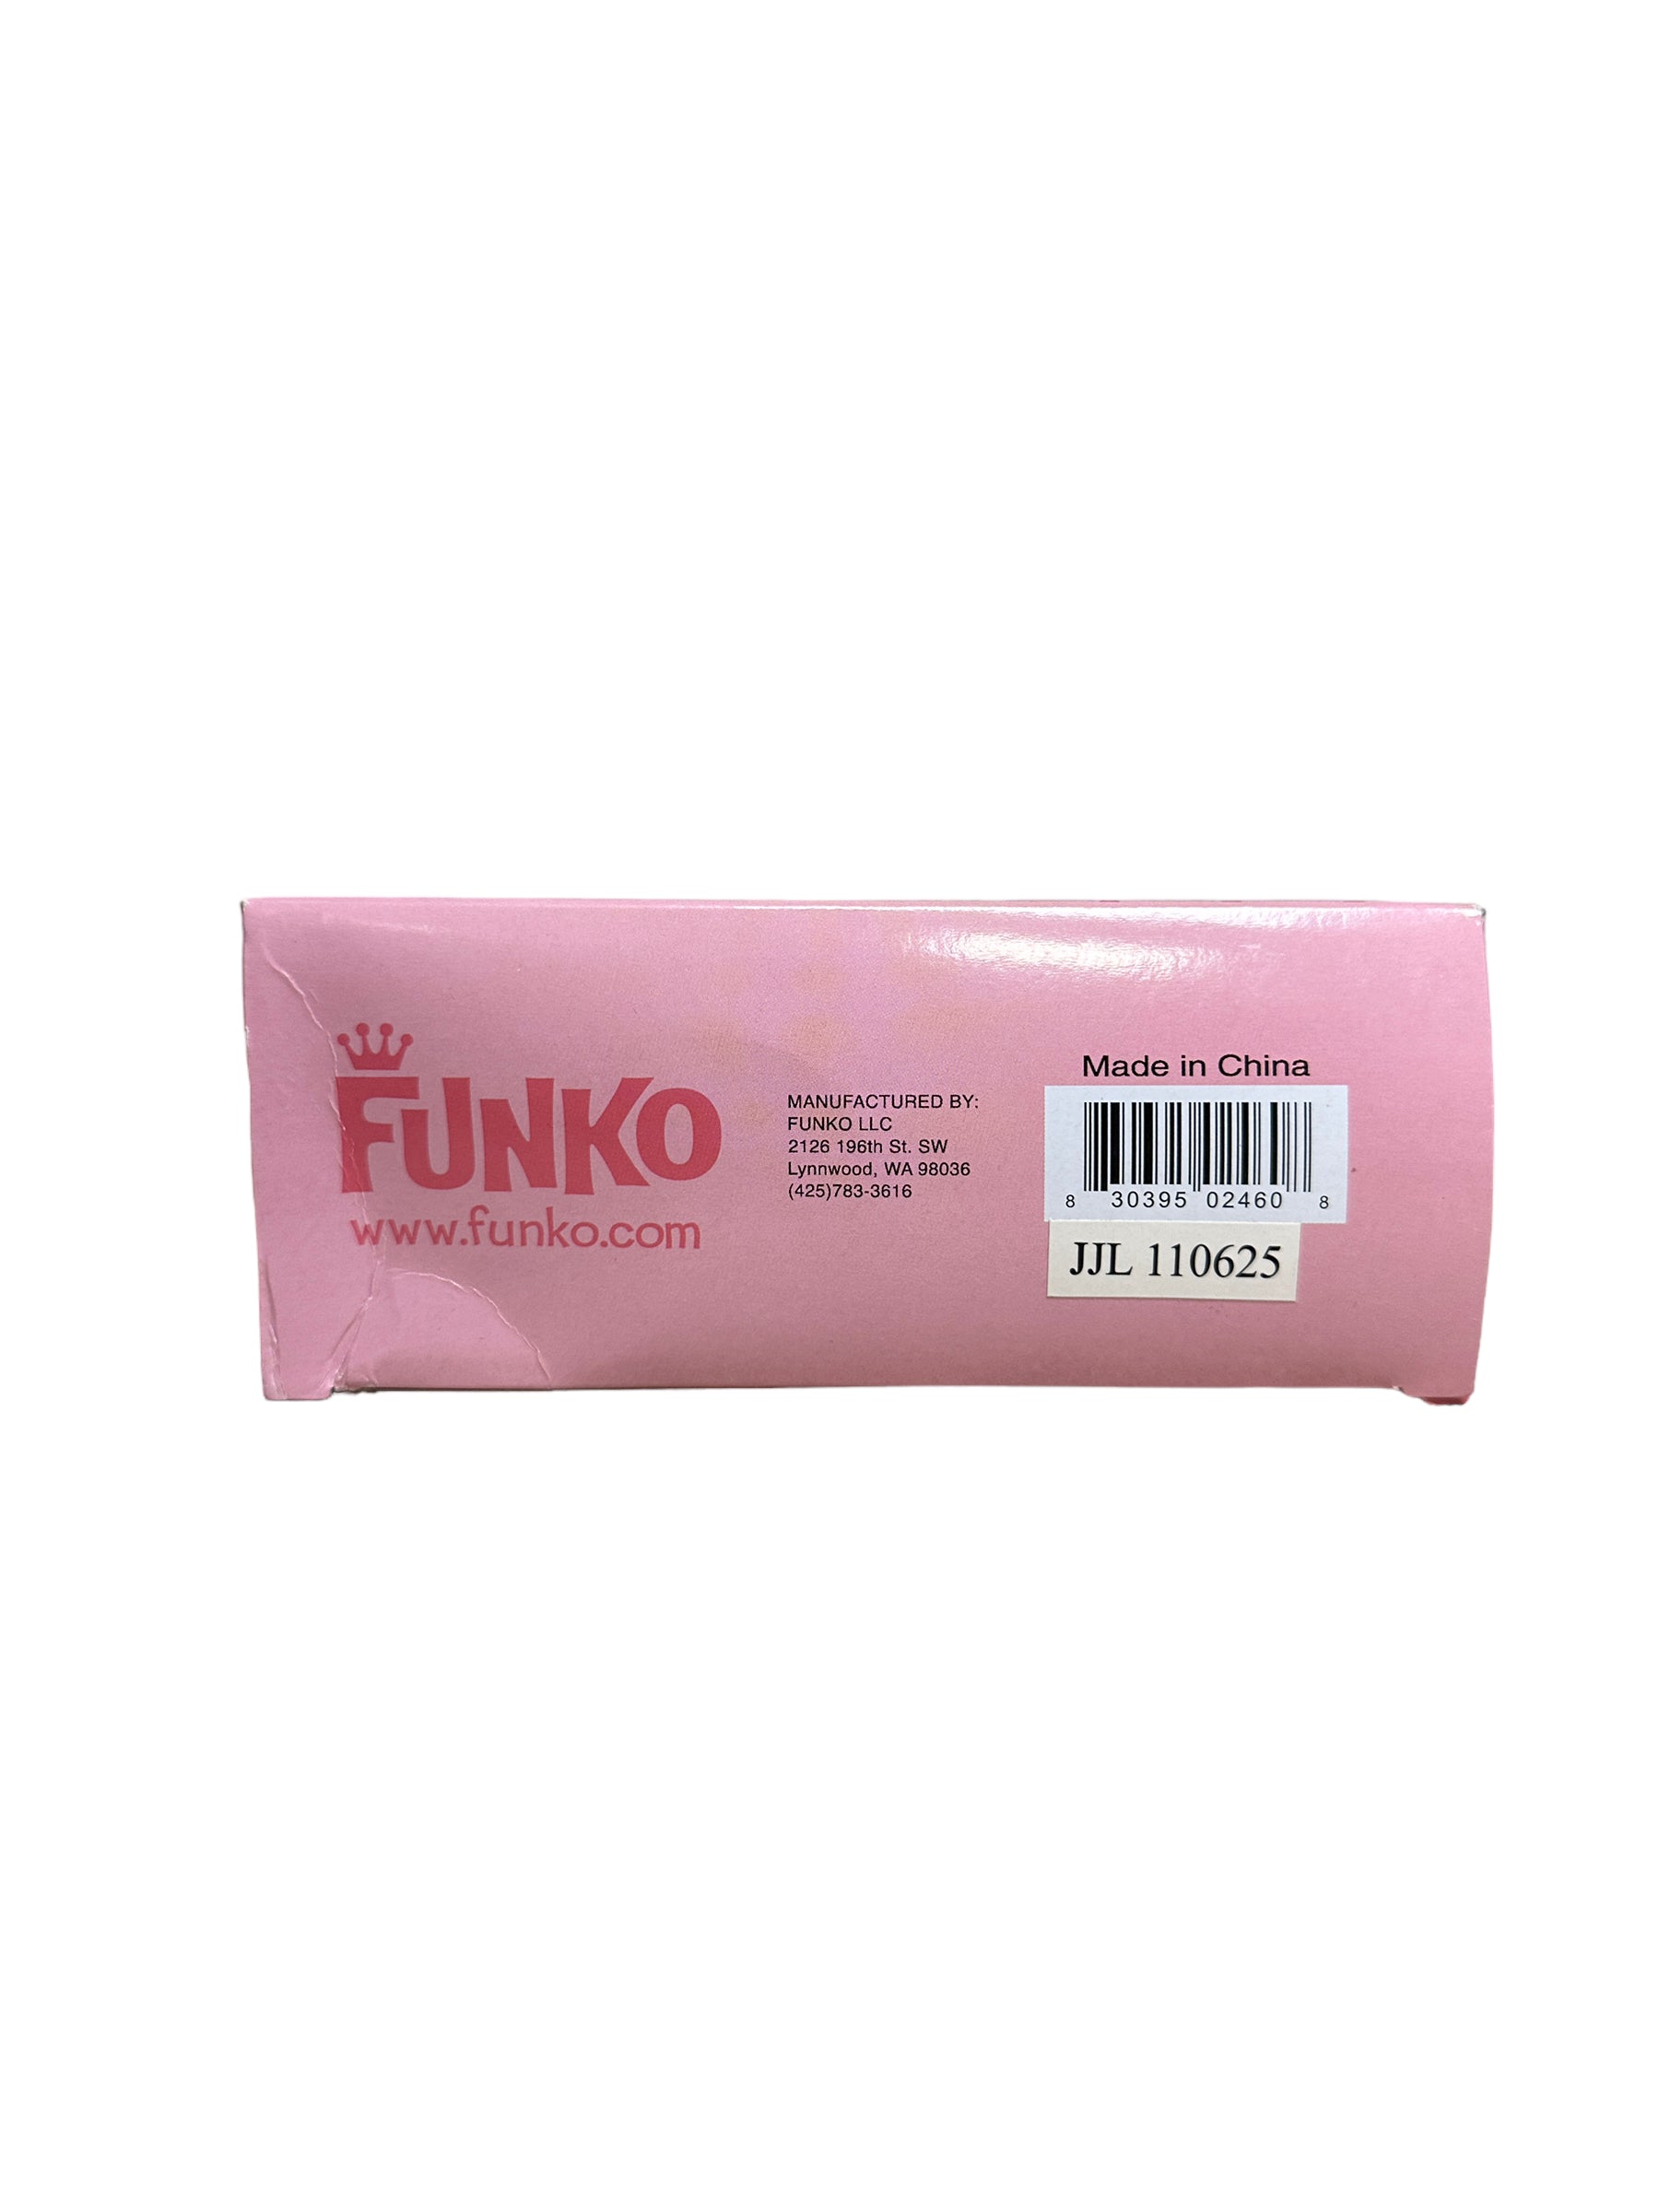 Count Chocula (Metallic) Funko Blox Vinyl Figure! - Ad Icons - SDCC 2011 Exclusive LE240 Pcs - Condition 6.5/10